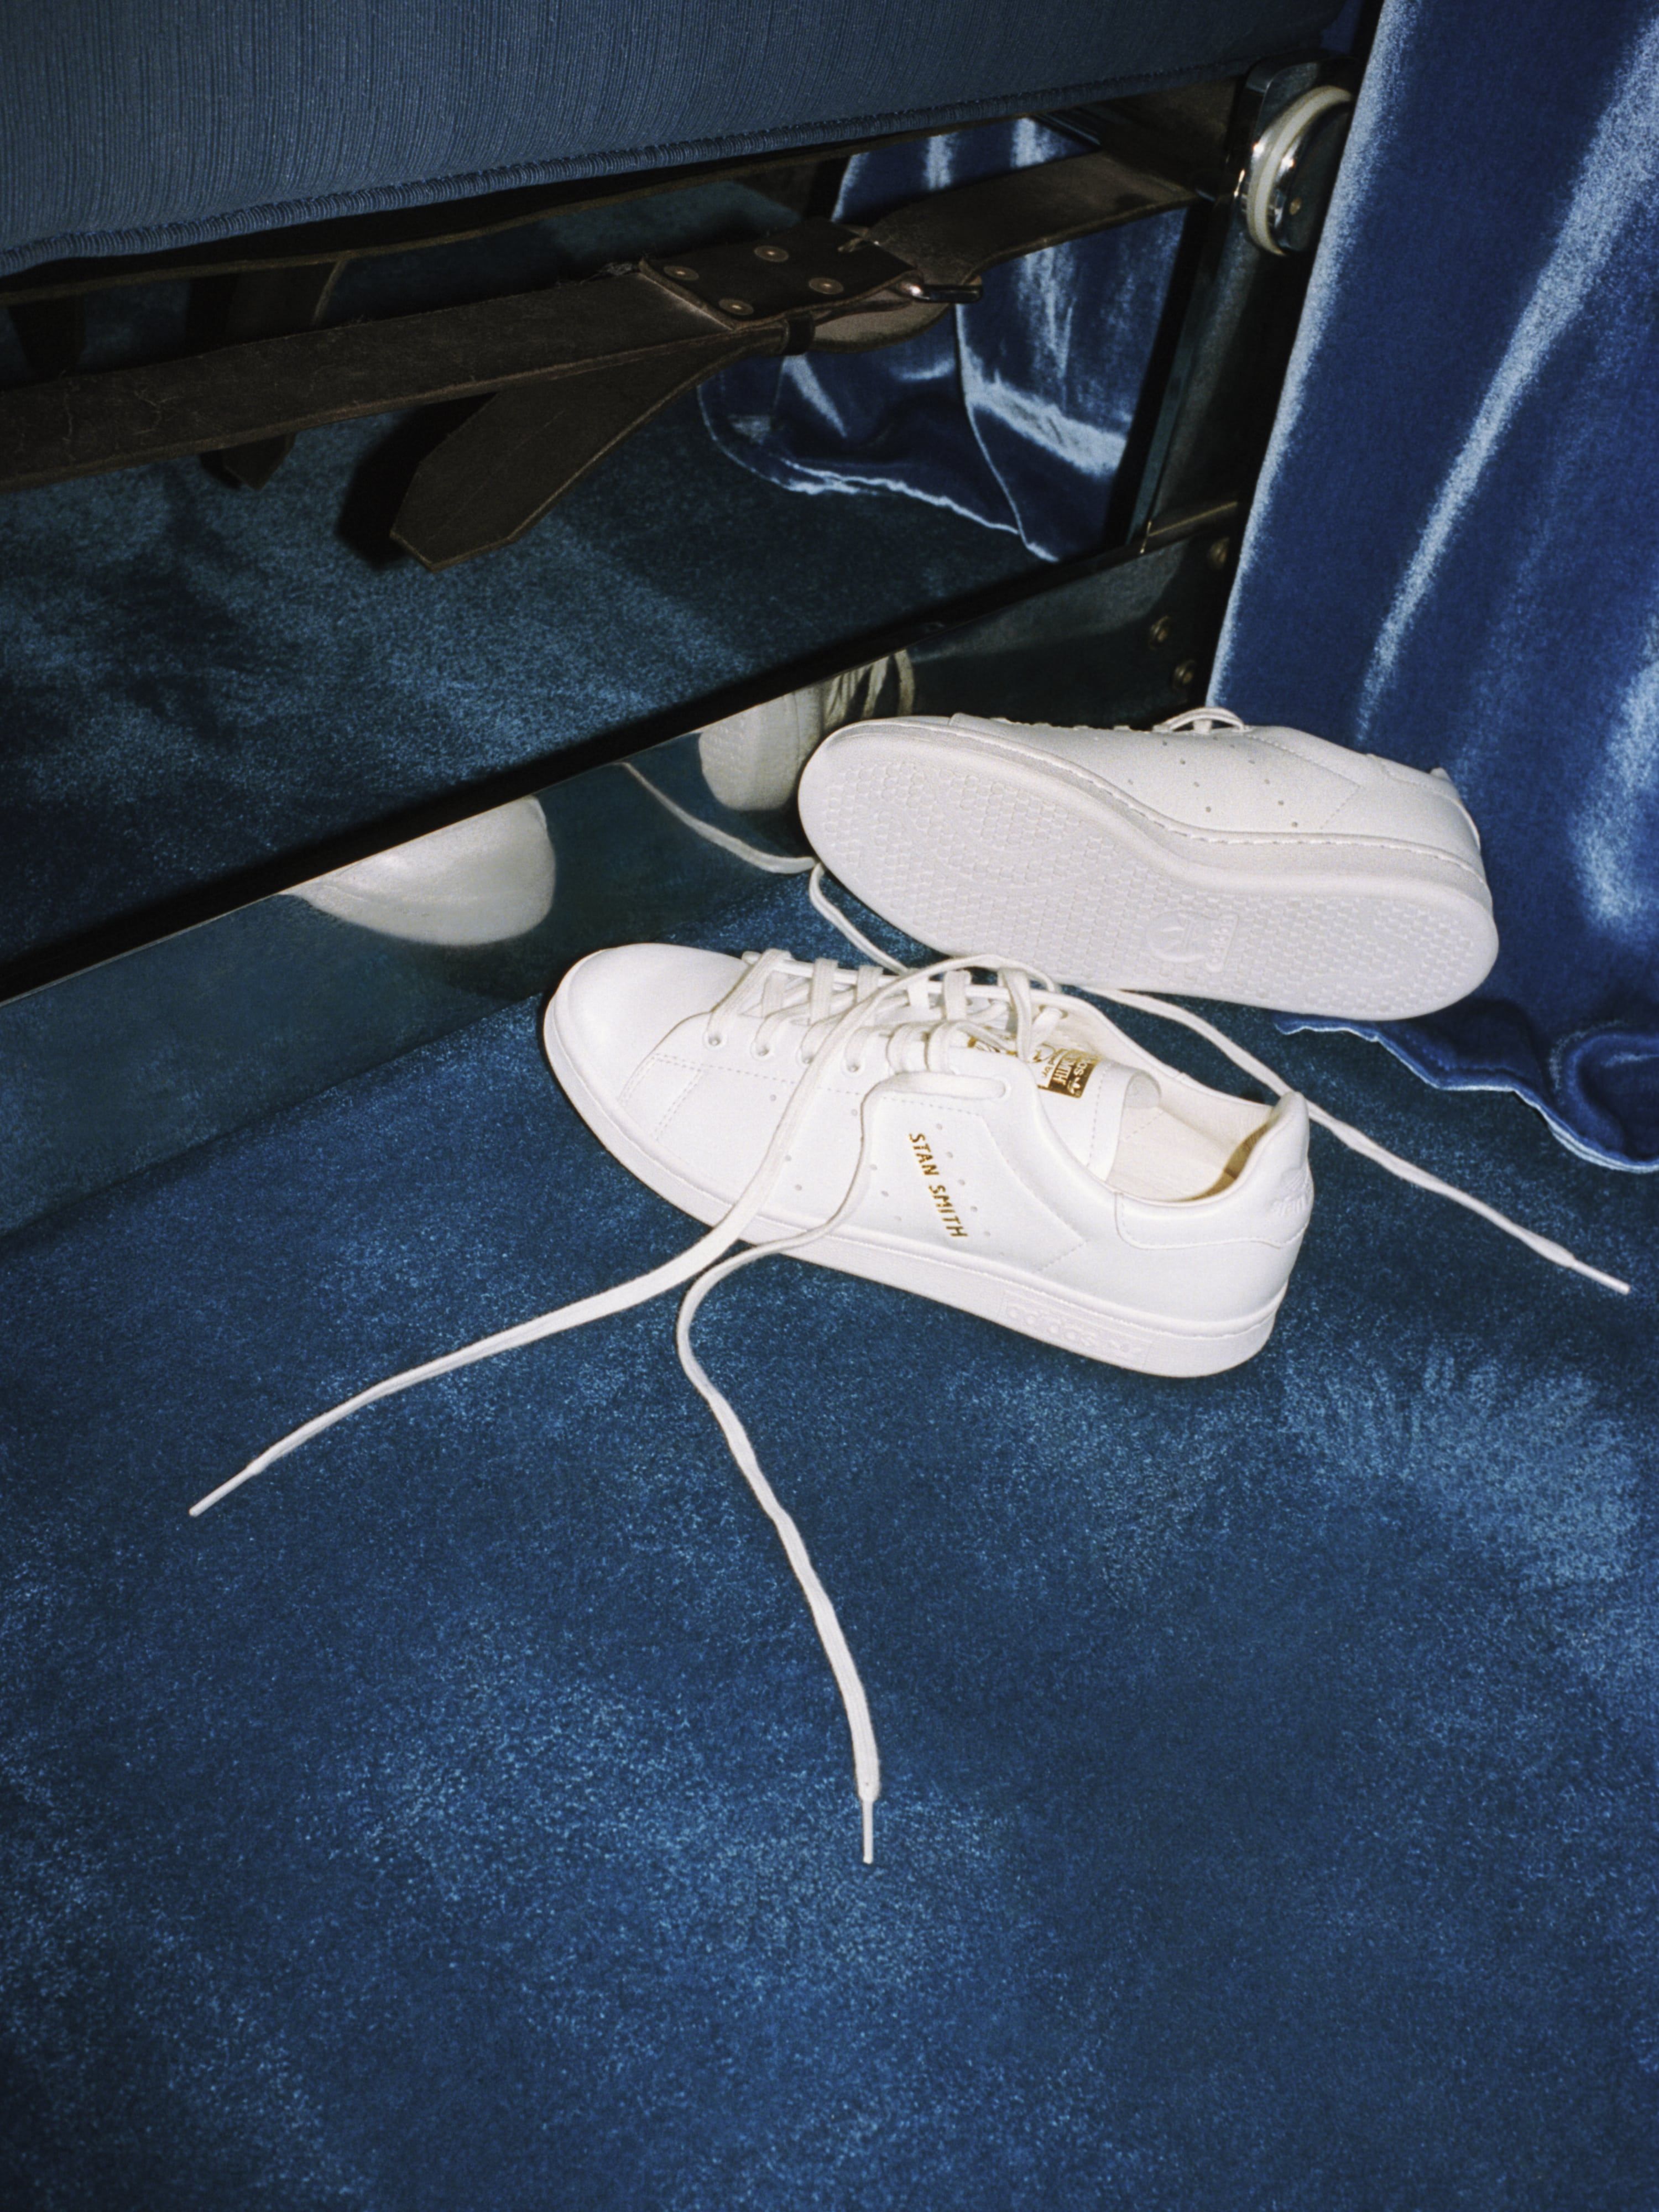 Adidas Originals Stan Smith Tennis Shoes Sneakers White Black Gold